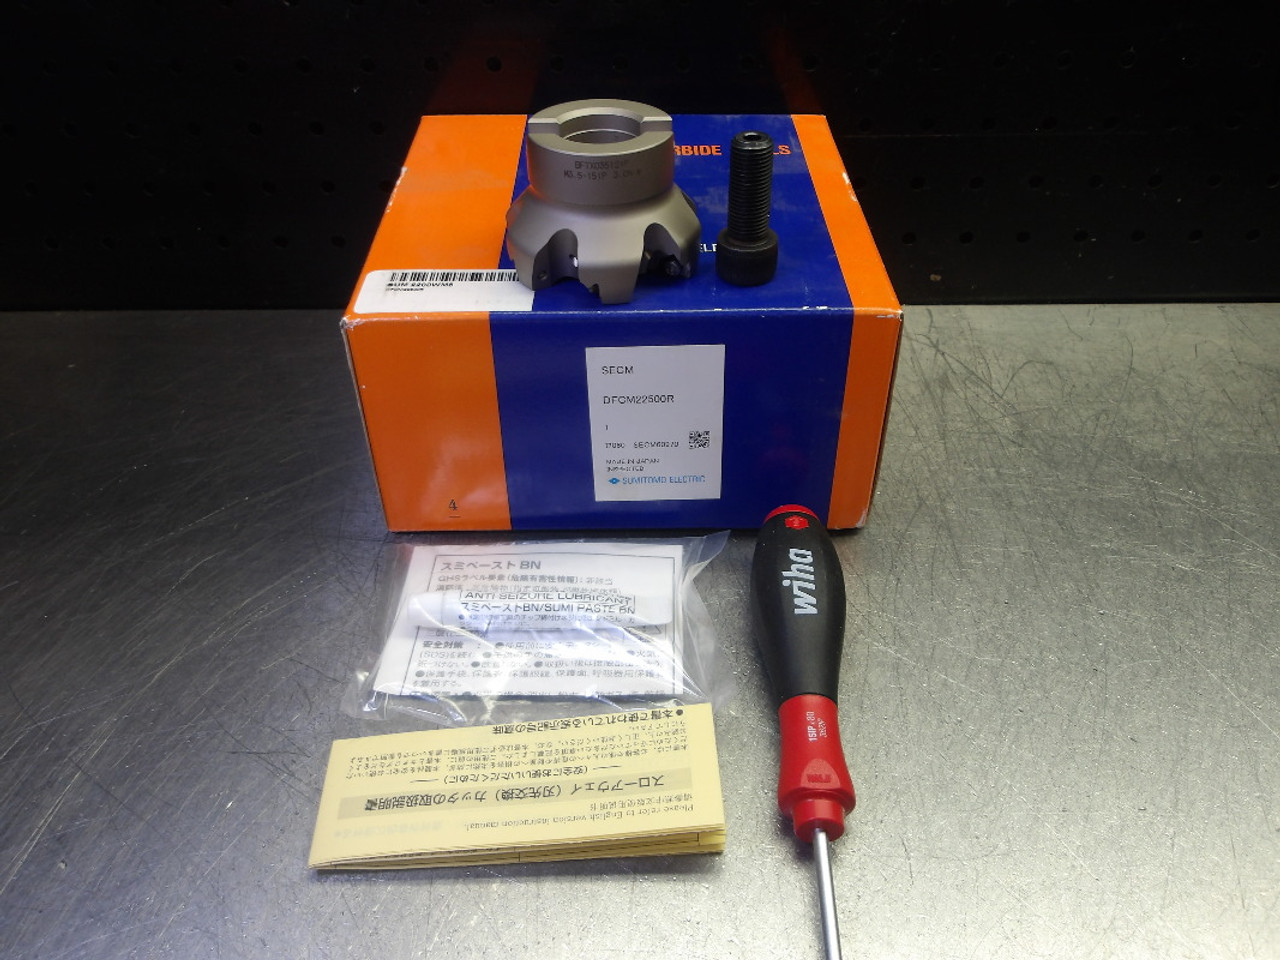 Sumitomo 2.5 Indexable Coolant Thru Facemill 1 Arbor DFCM22500R (LOC2847A)